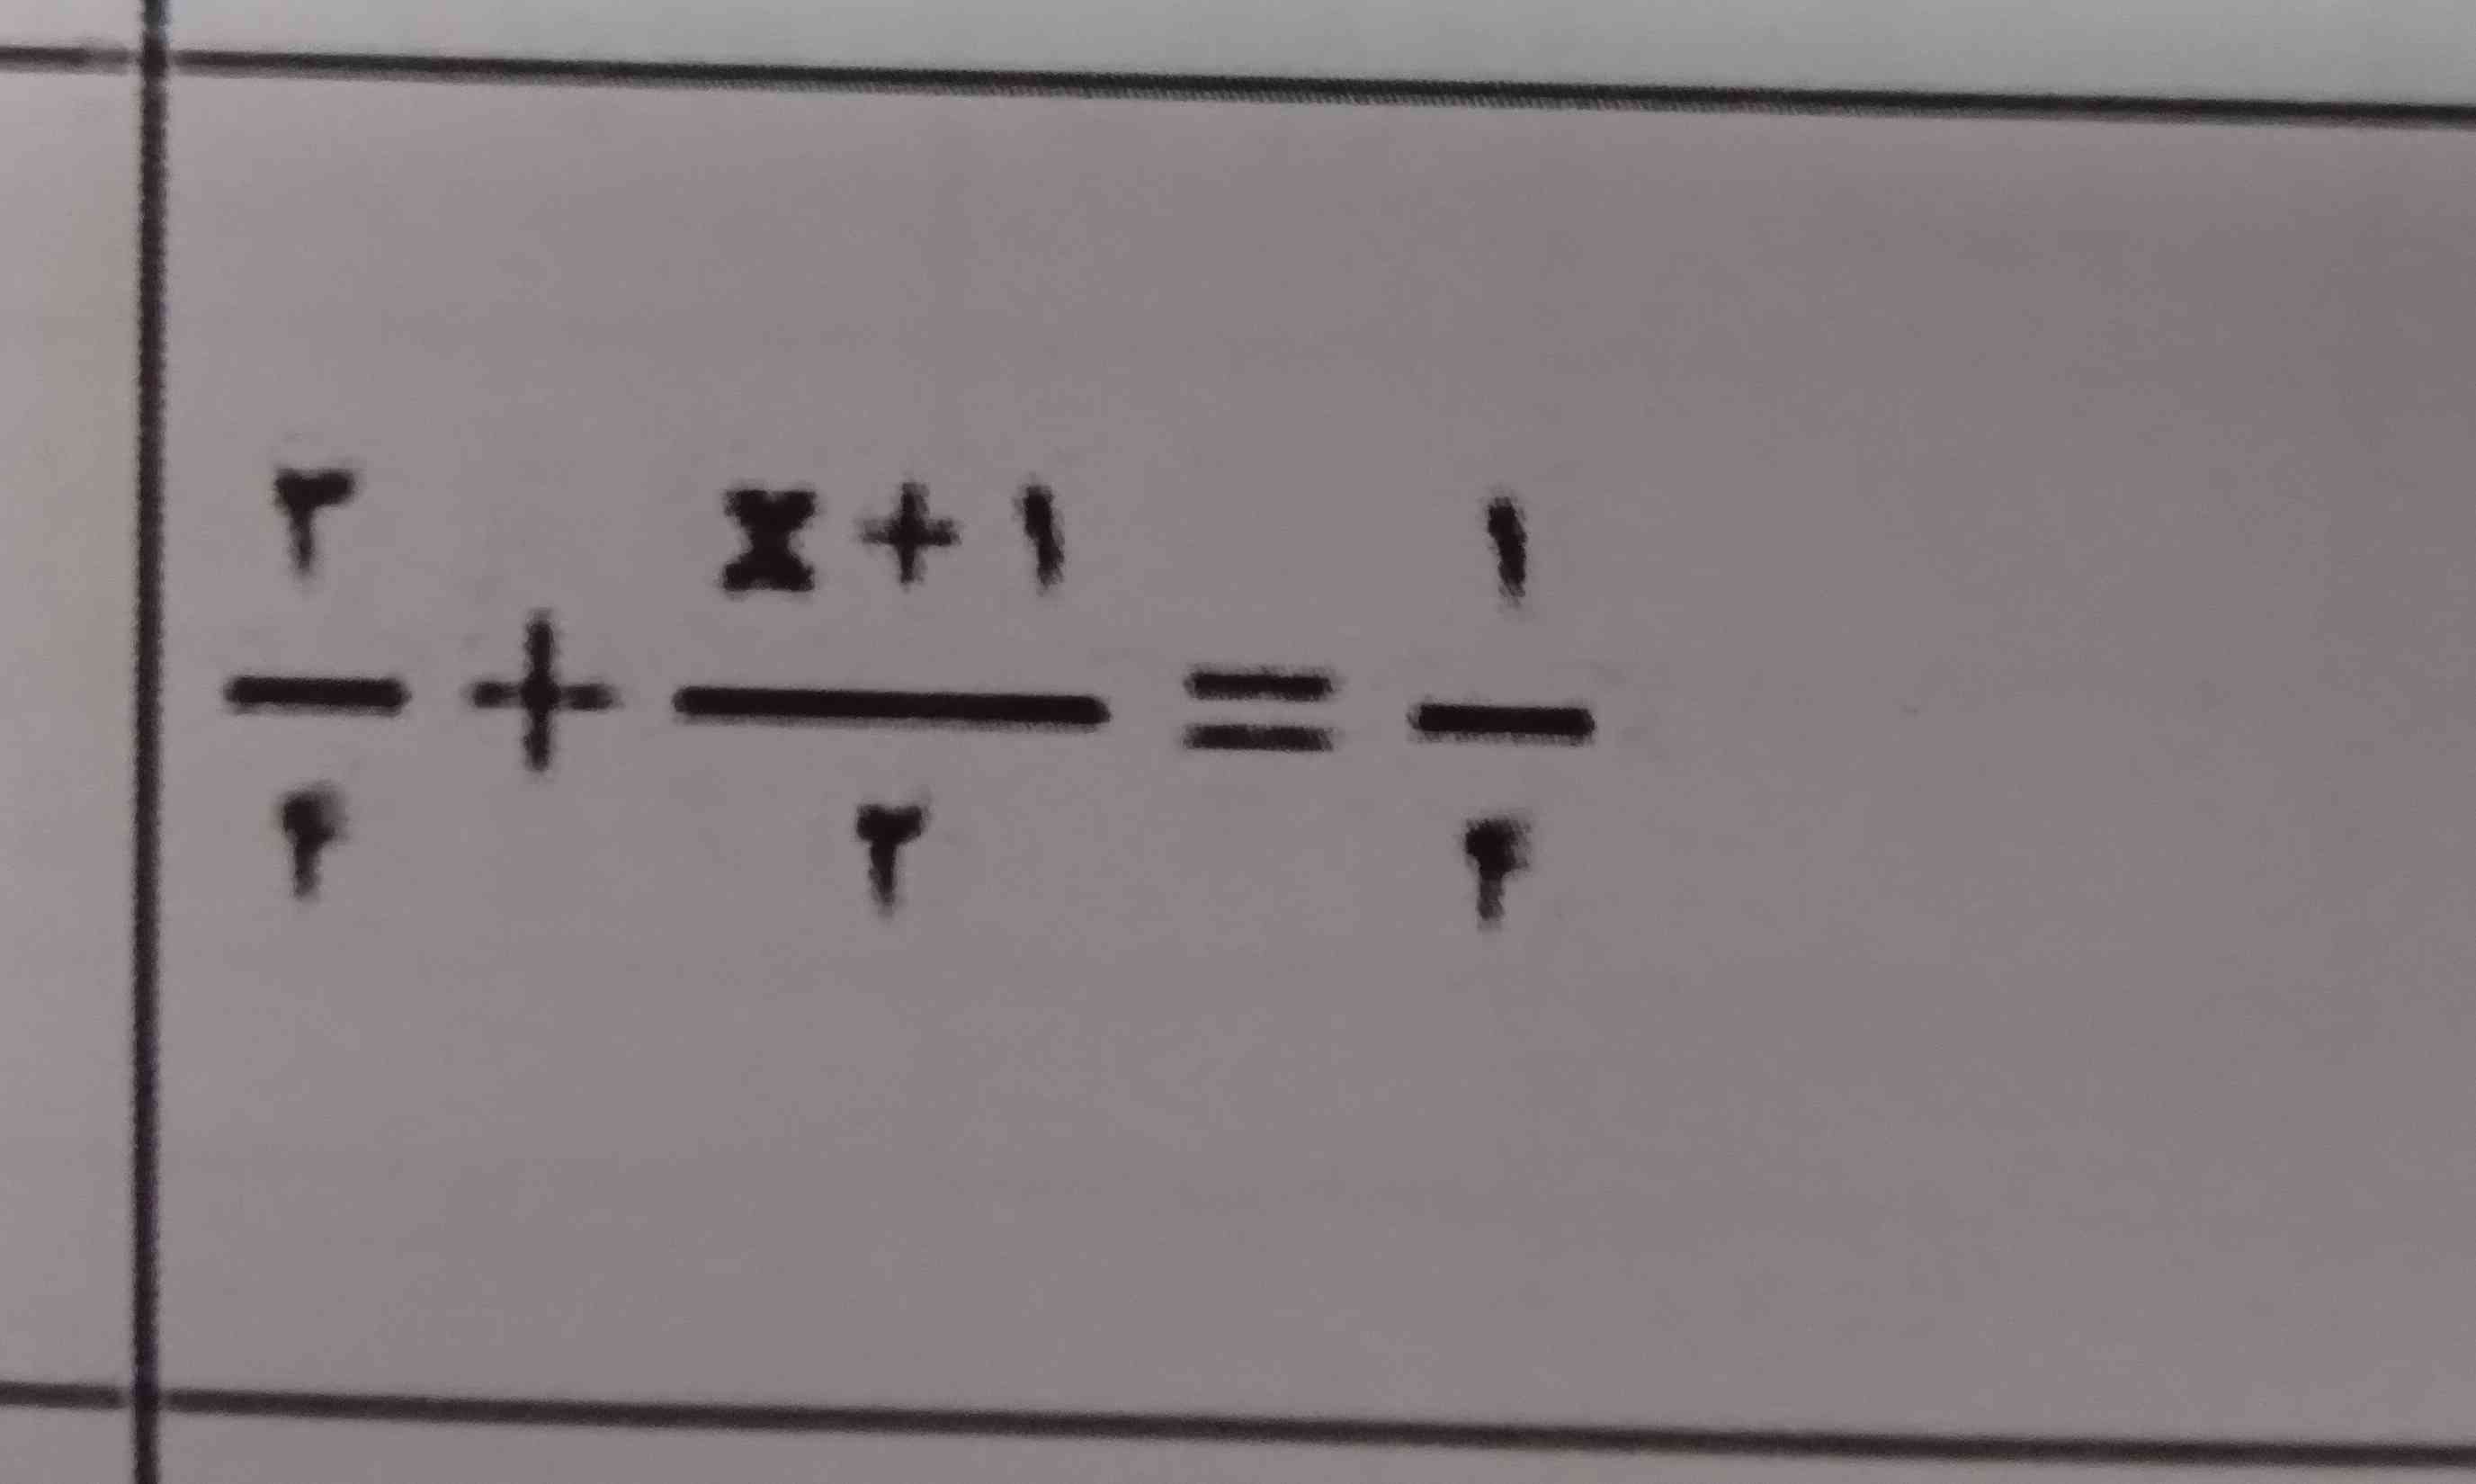 معادله رو لطفا حل کنید
تاج میدممم